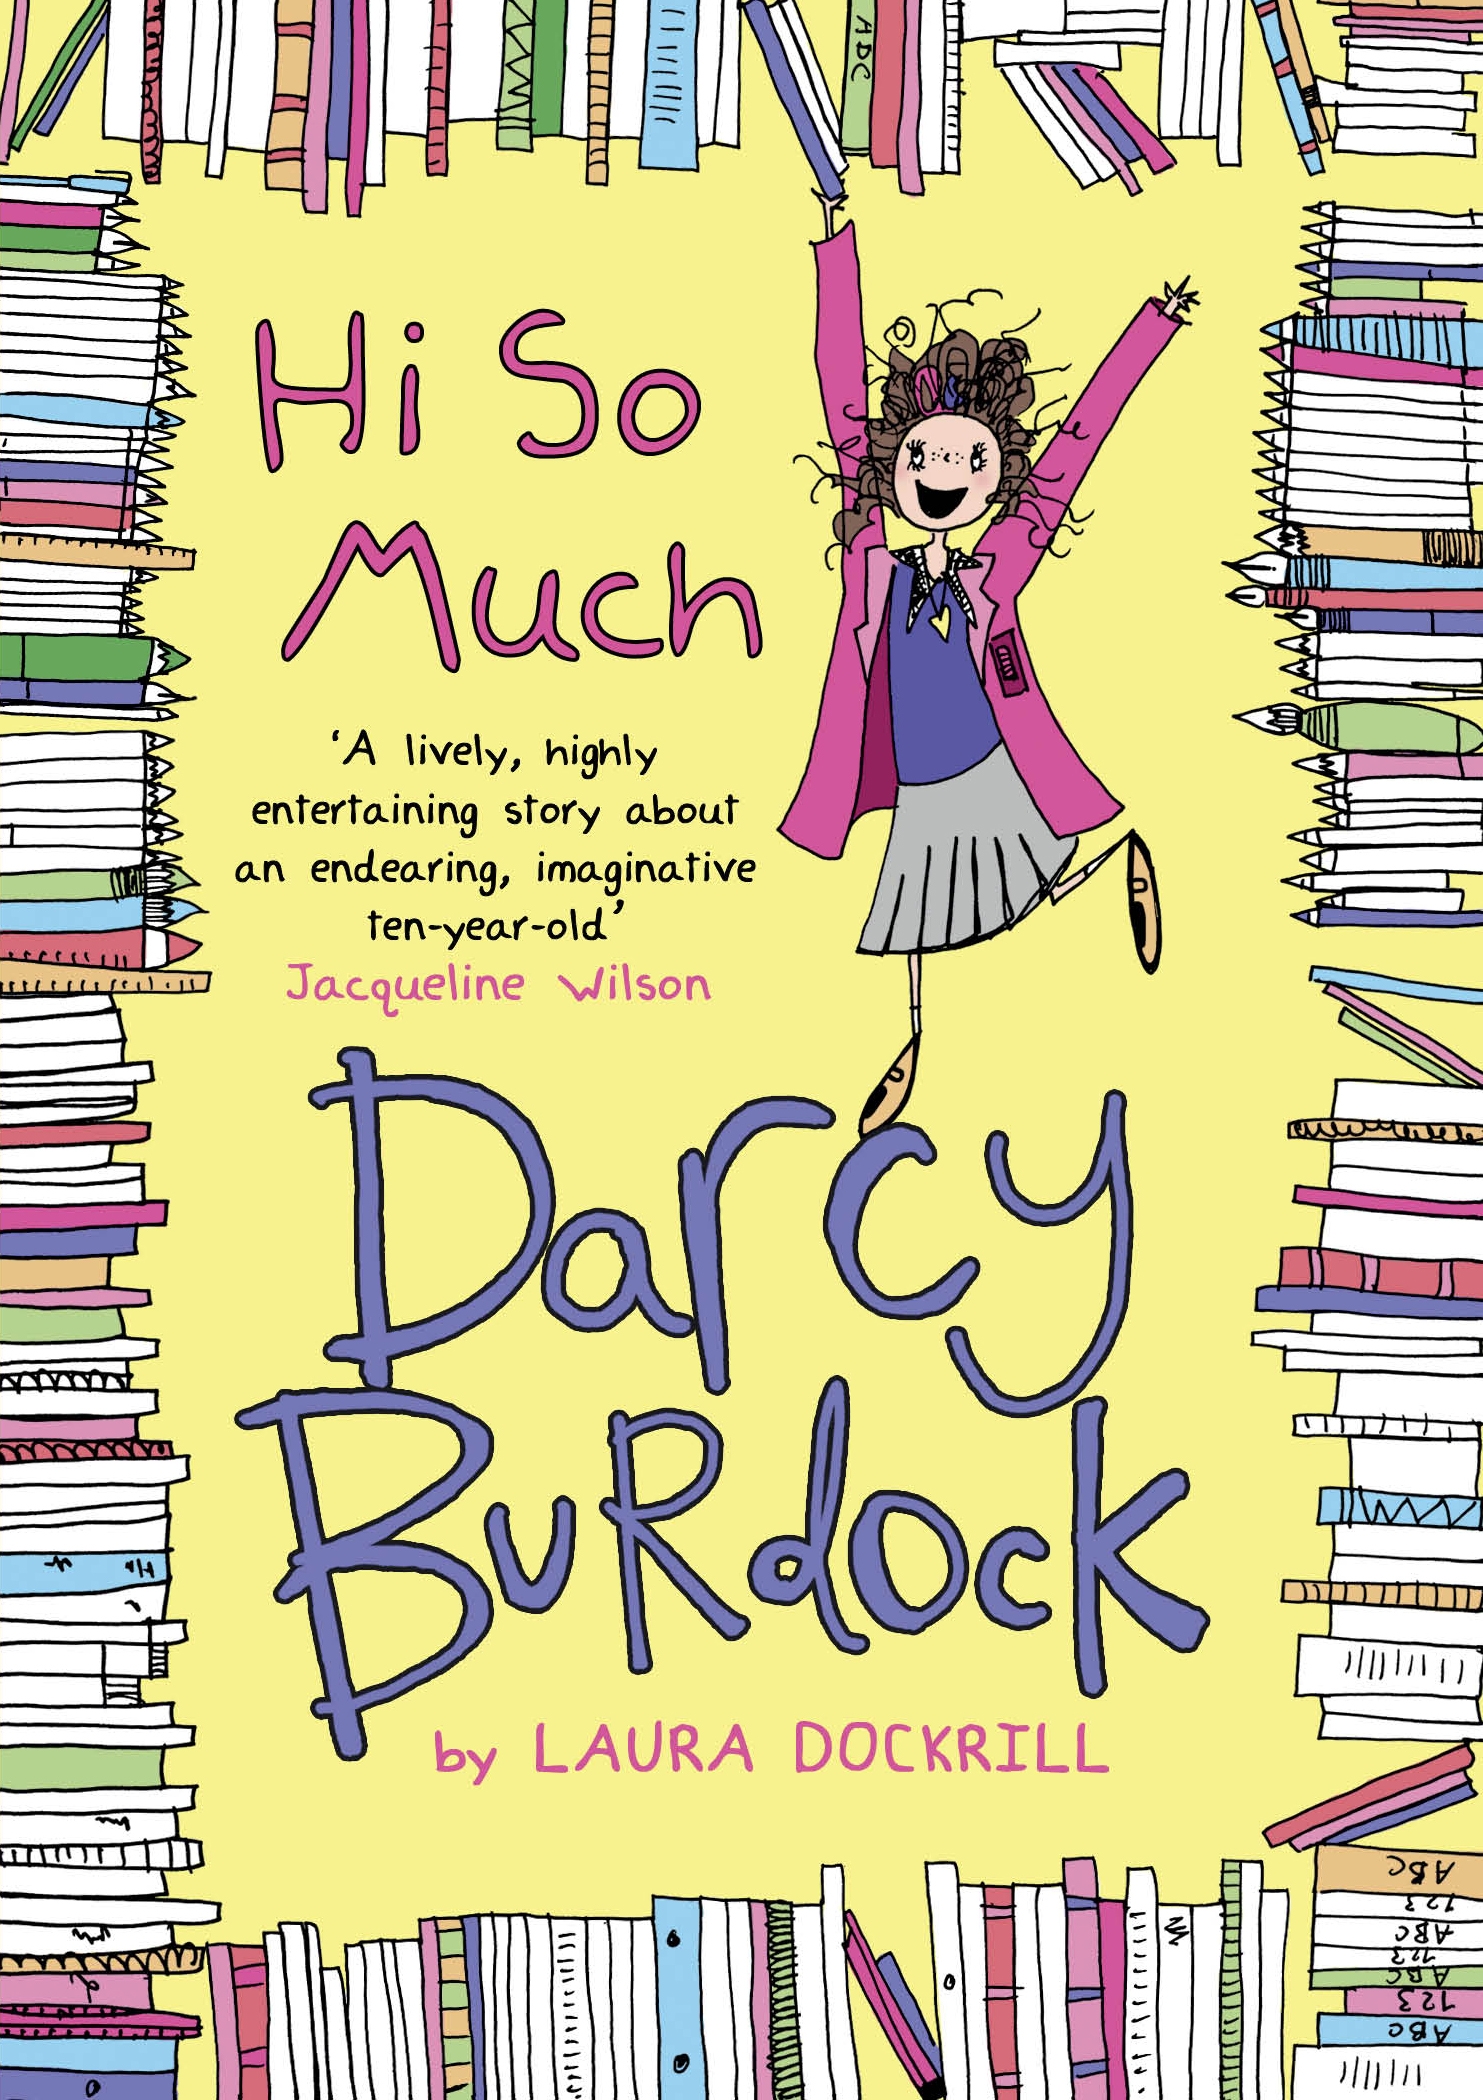 Darcy Burdock Hi So Much By Laura Dockrill Penguin Books New Zealand 